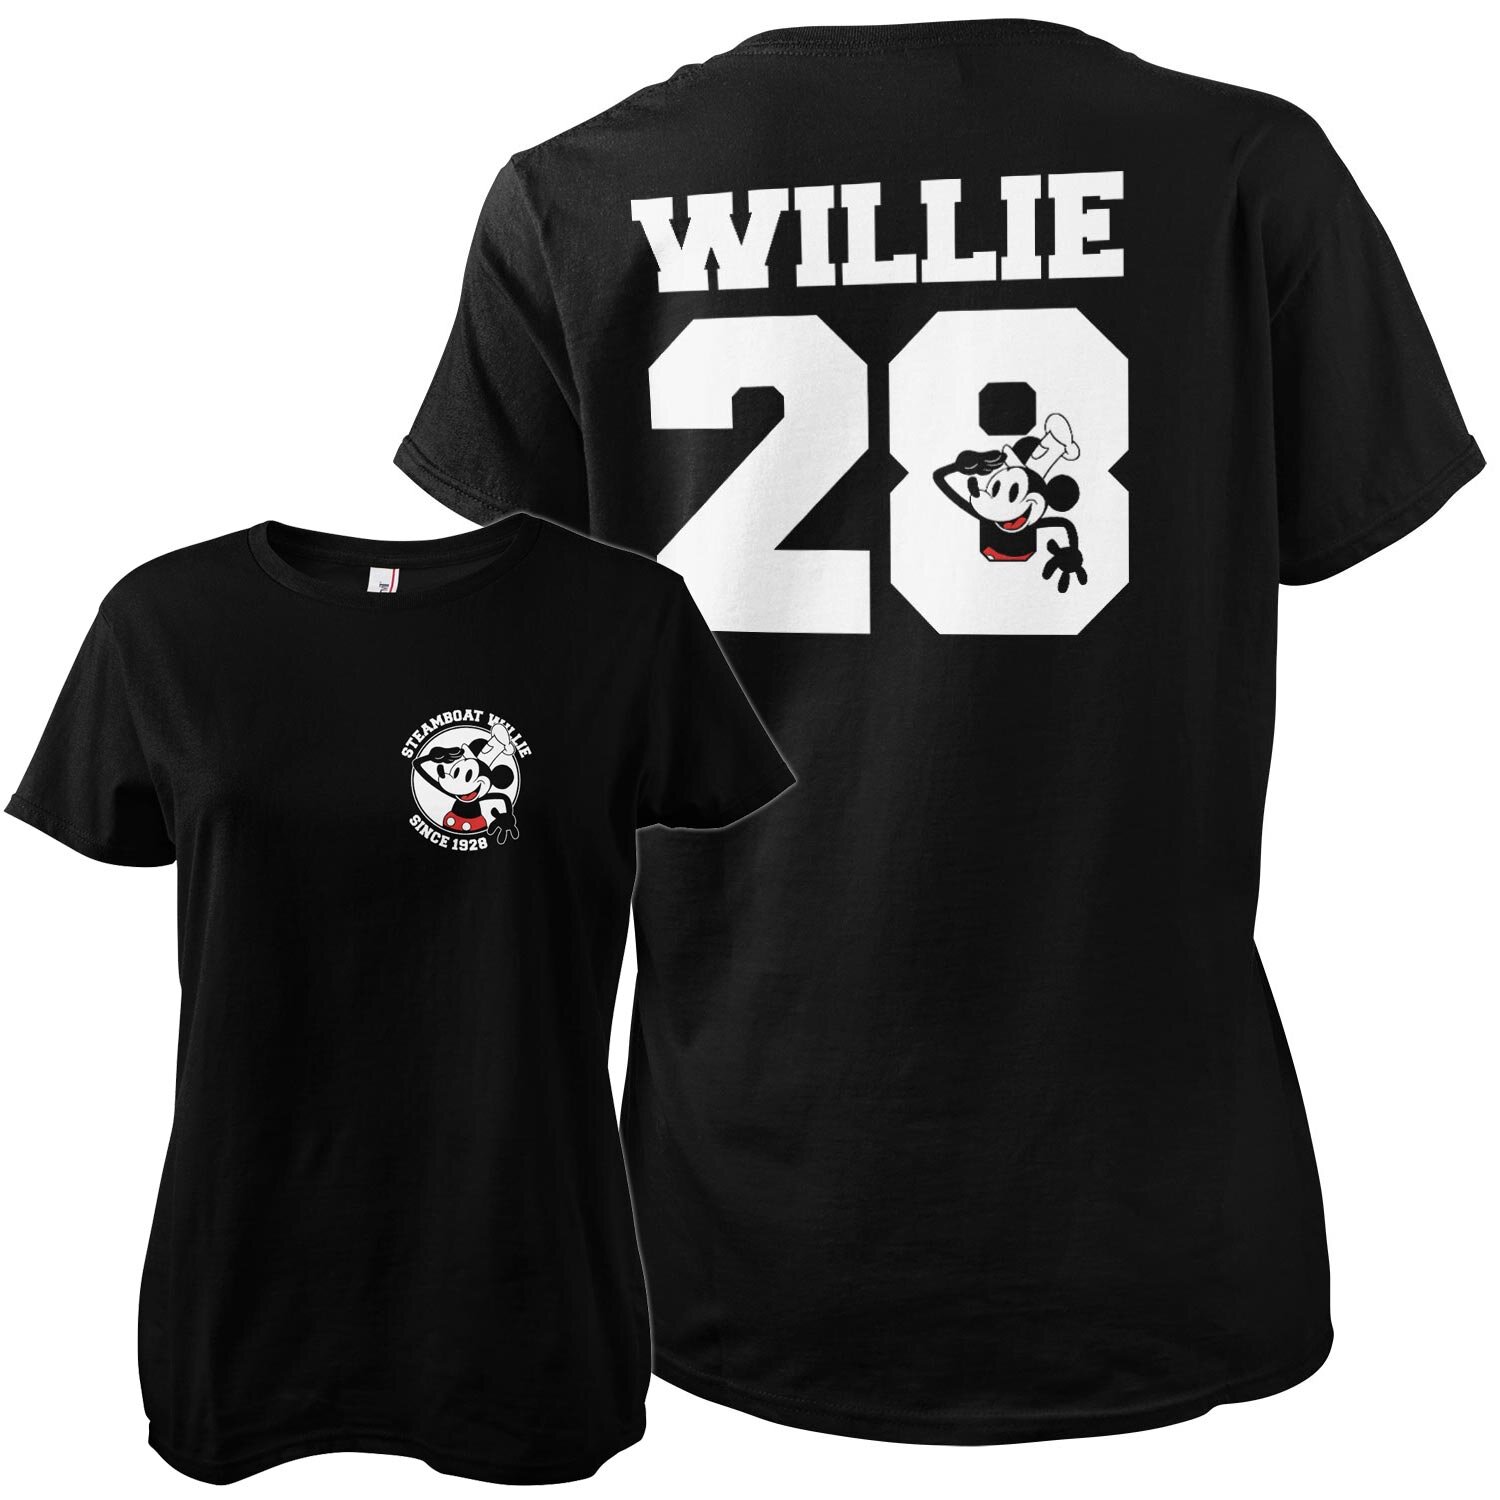 Willie 28 Girly Tee